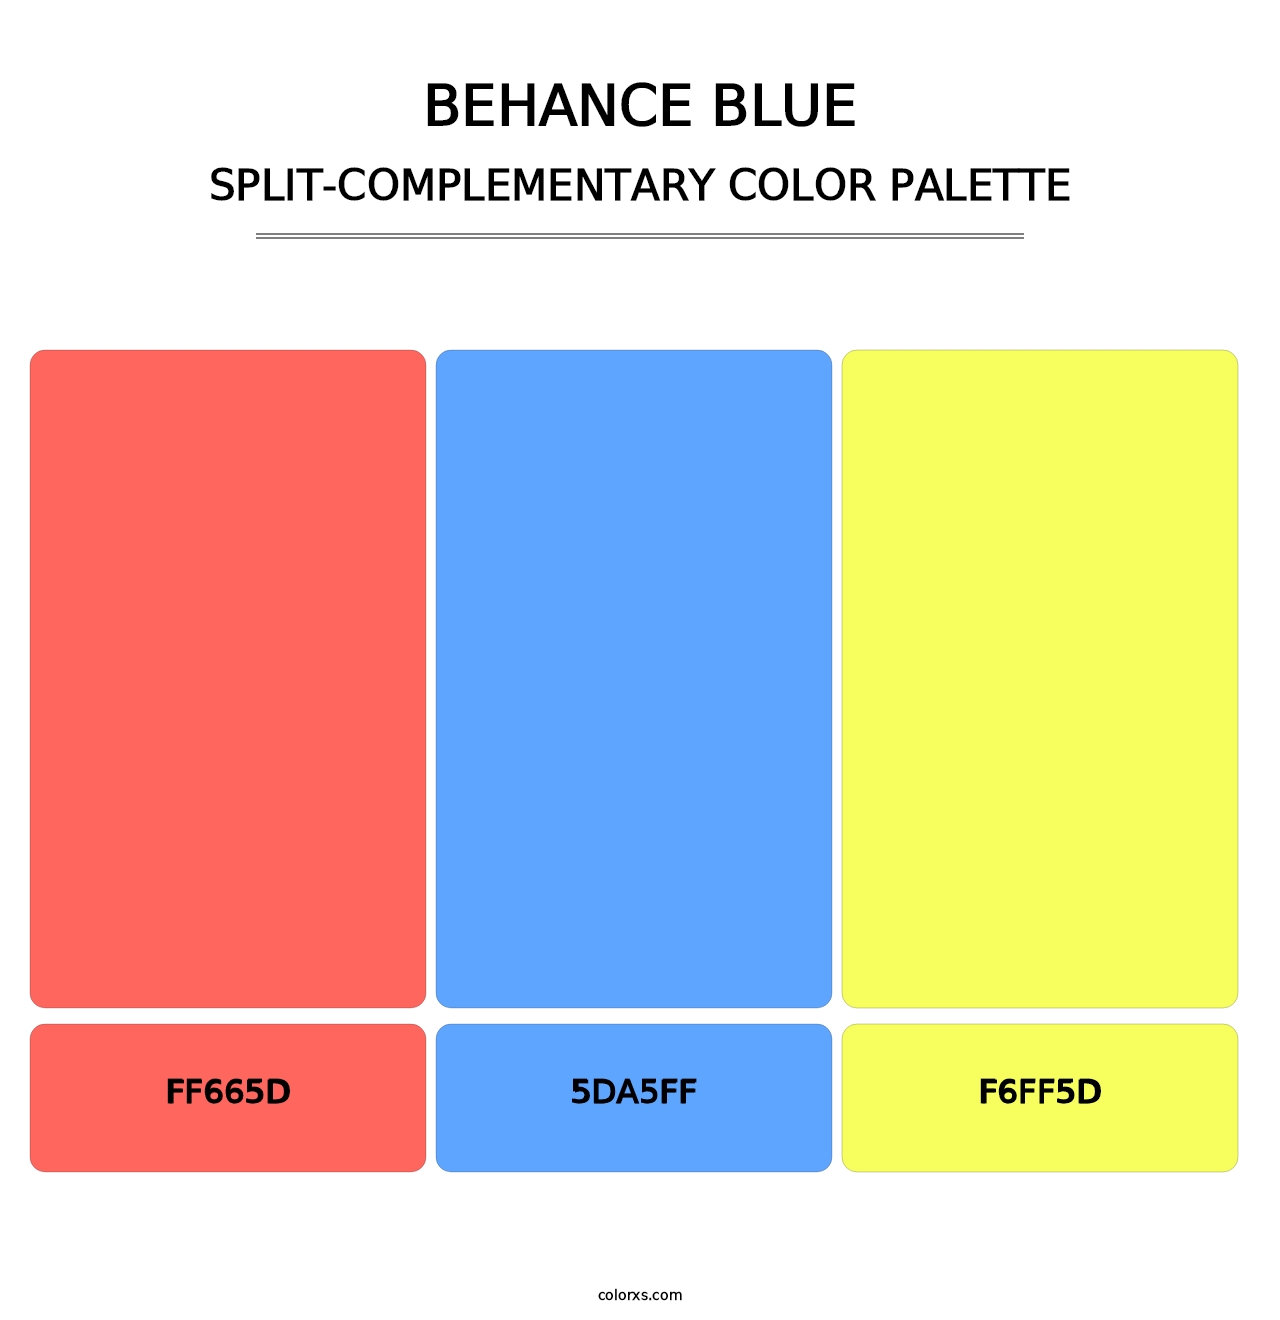 Behance Blue - Split-Complementary Color Palette